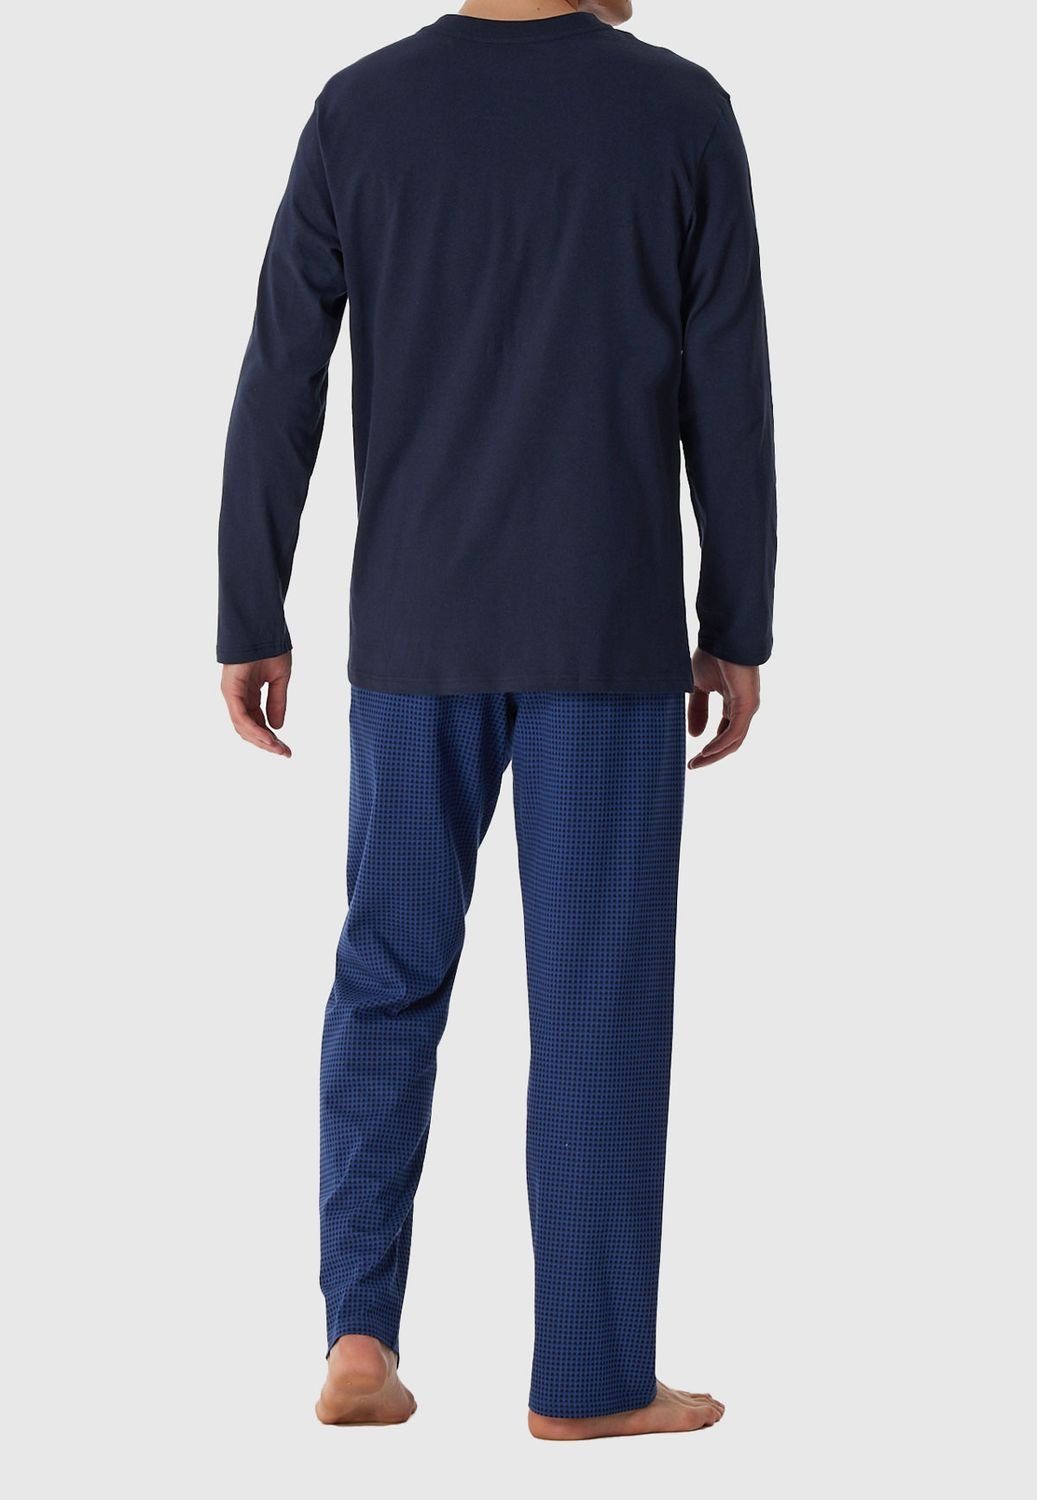 Unterteil premium Stück Pyjama (Set, V-Ausschnitt, Schiesser navy inspiration 1 / tlg) blau selected! lang, 2 Hahnentritt